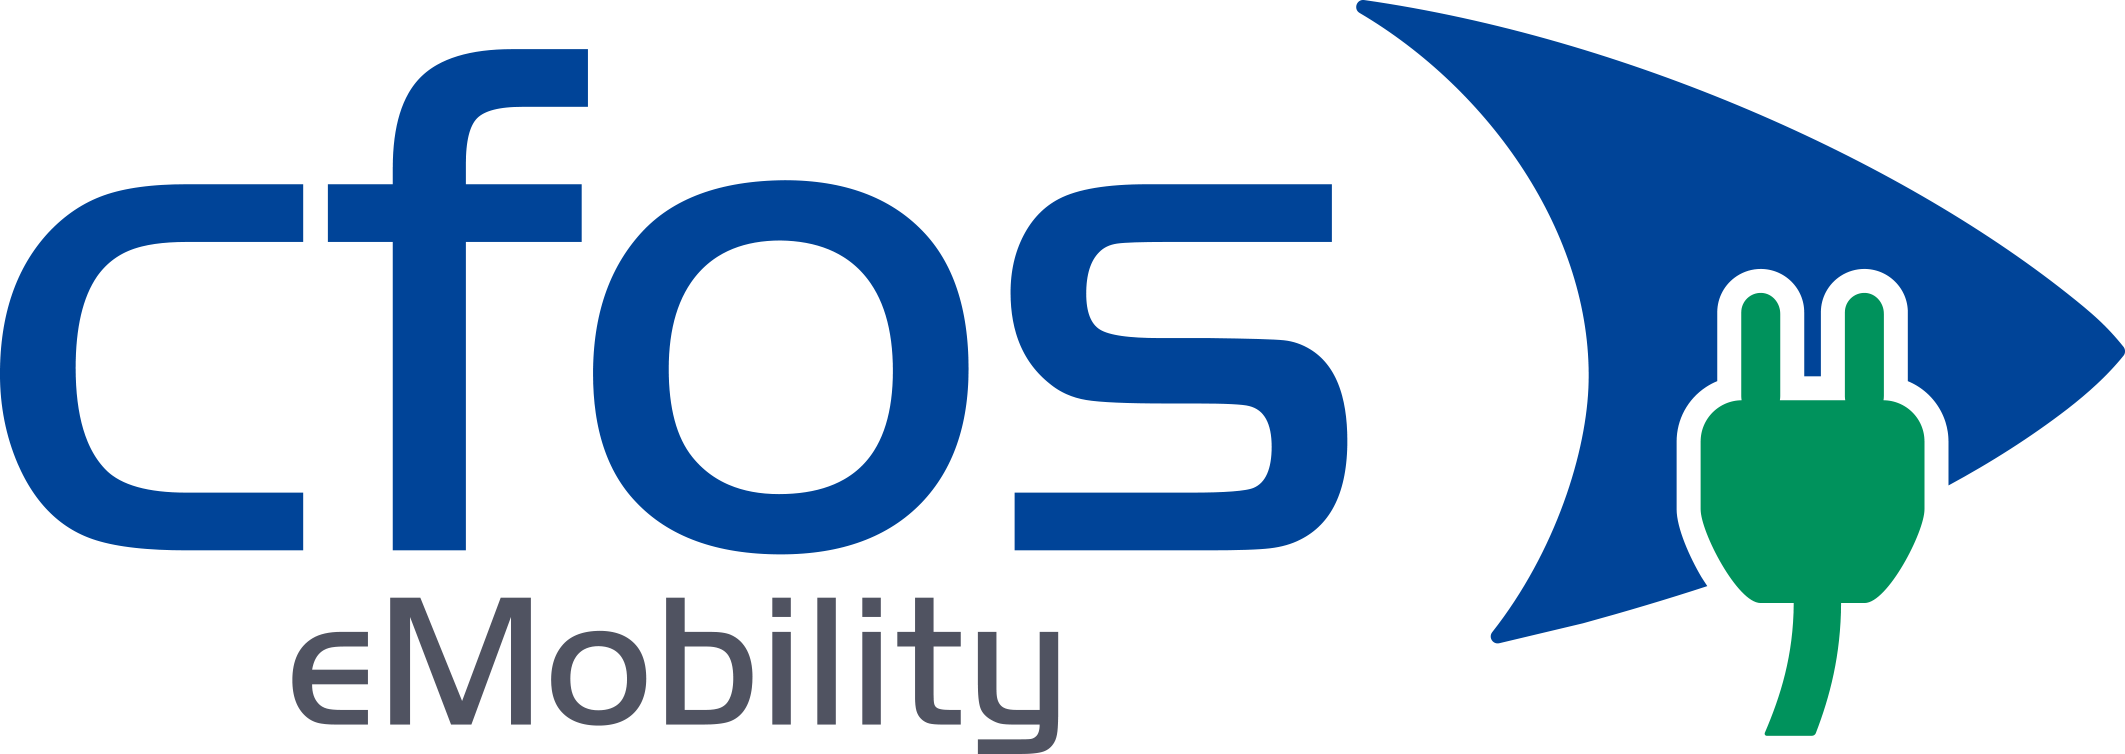 cFos eMobility Network